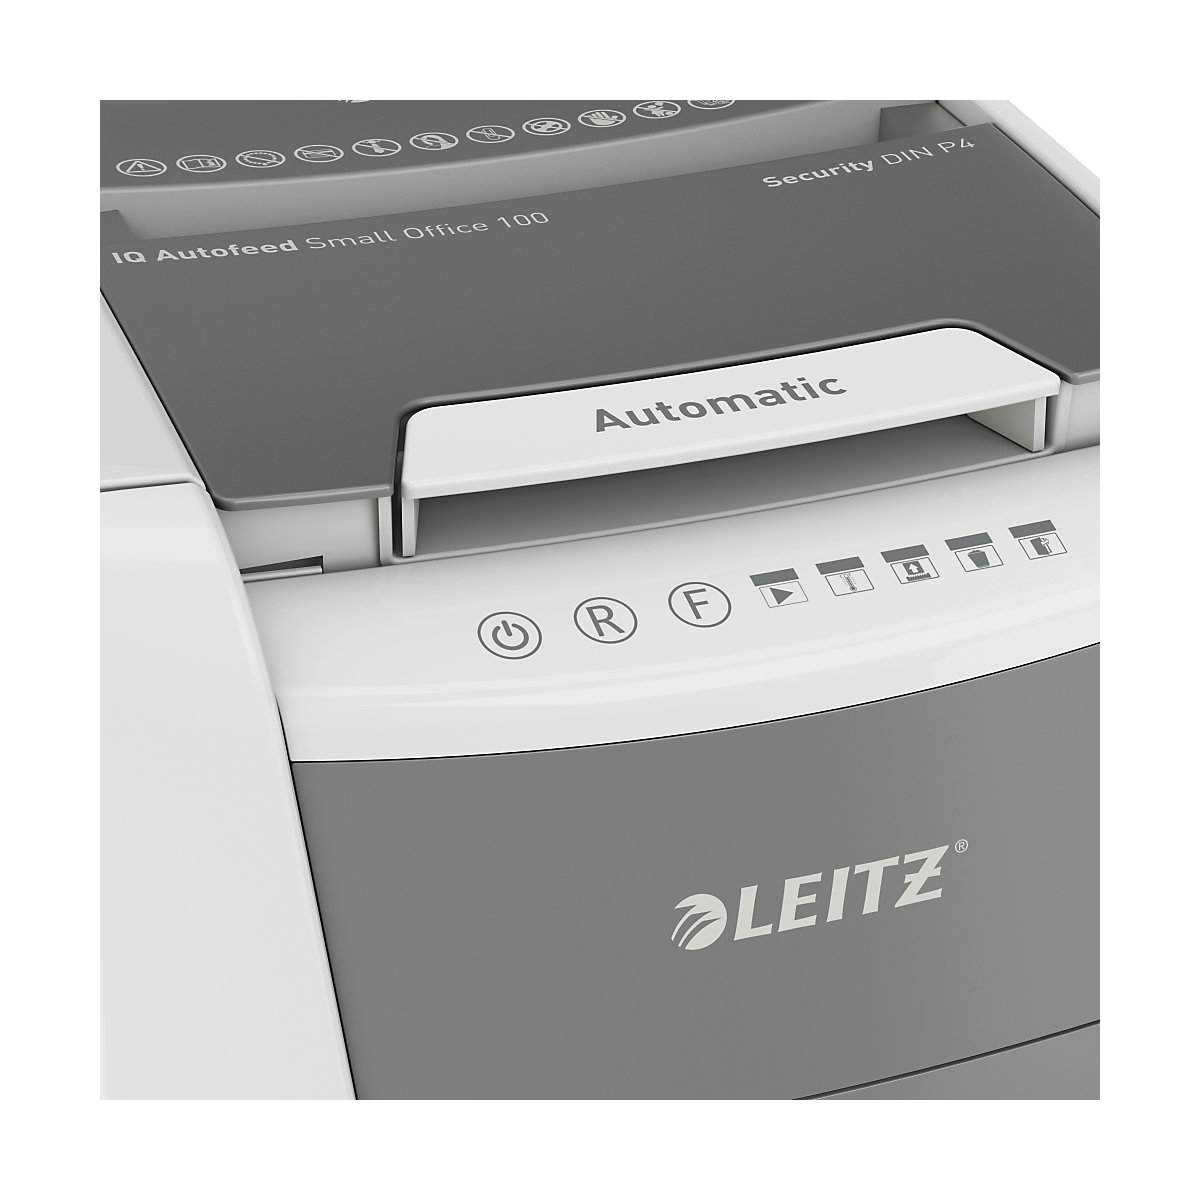 Skartovačka IQ Autofeed Small Office – Leitz (Obrázek výrobku 36)-35